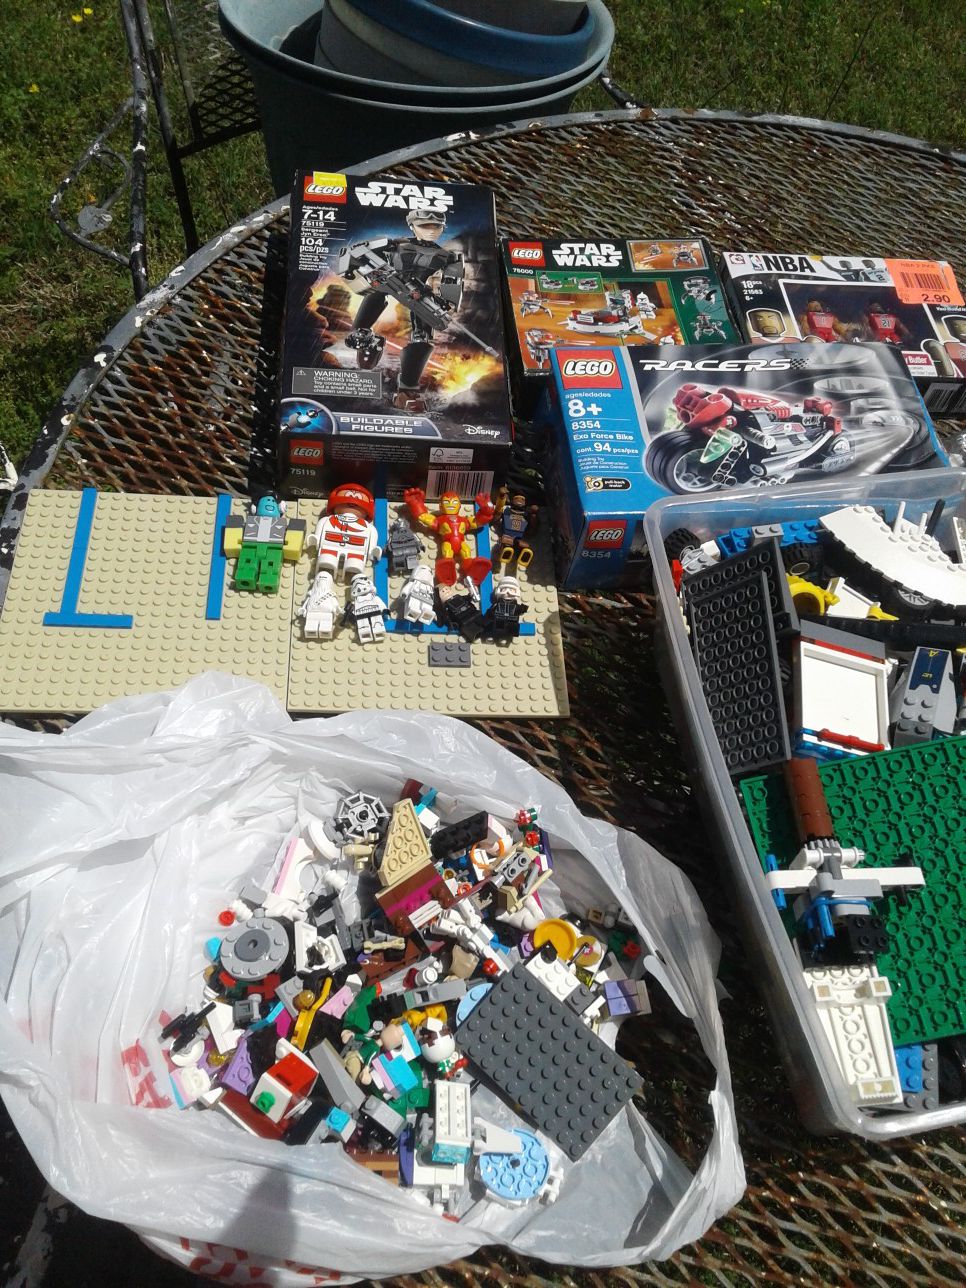 Legos Legos and more Legos